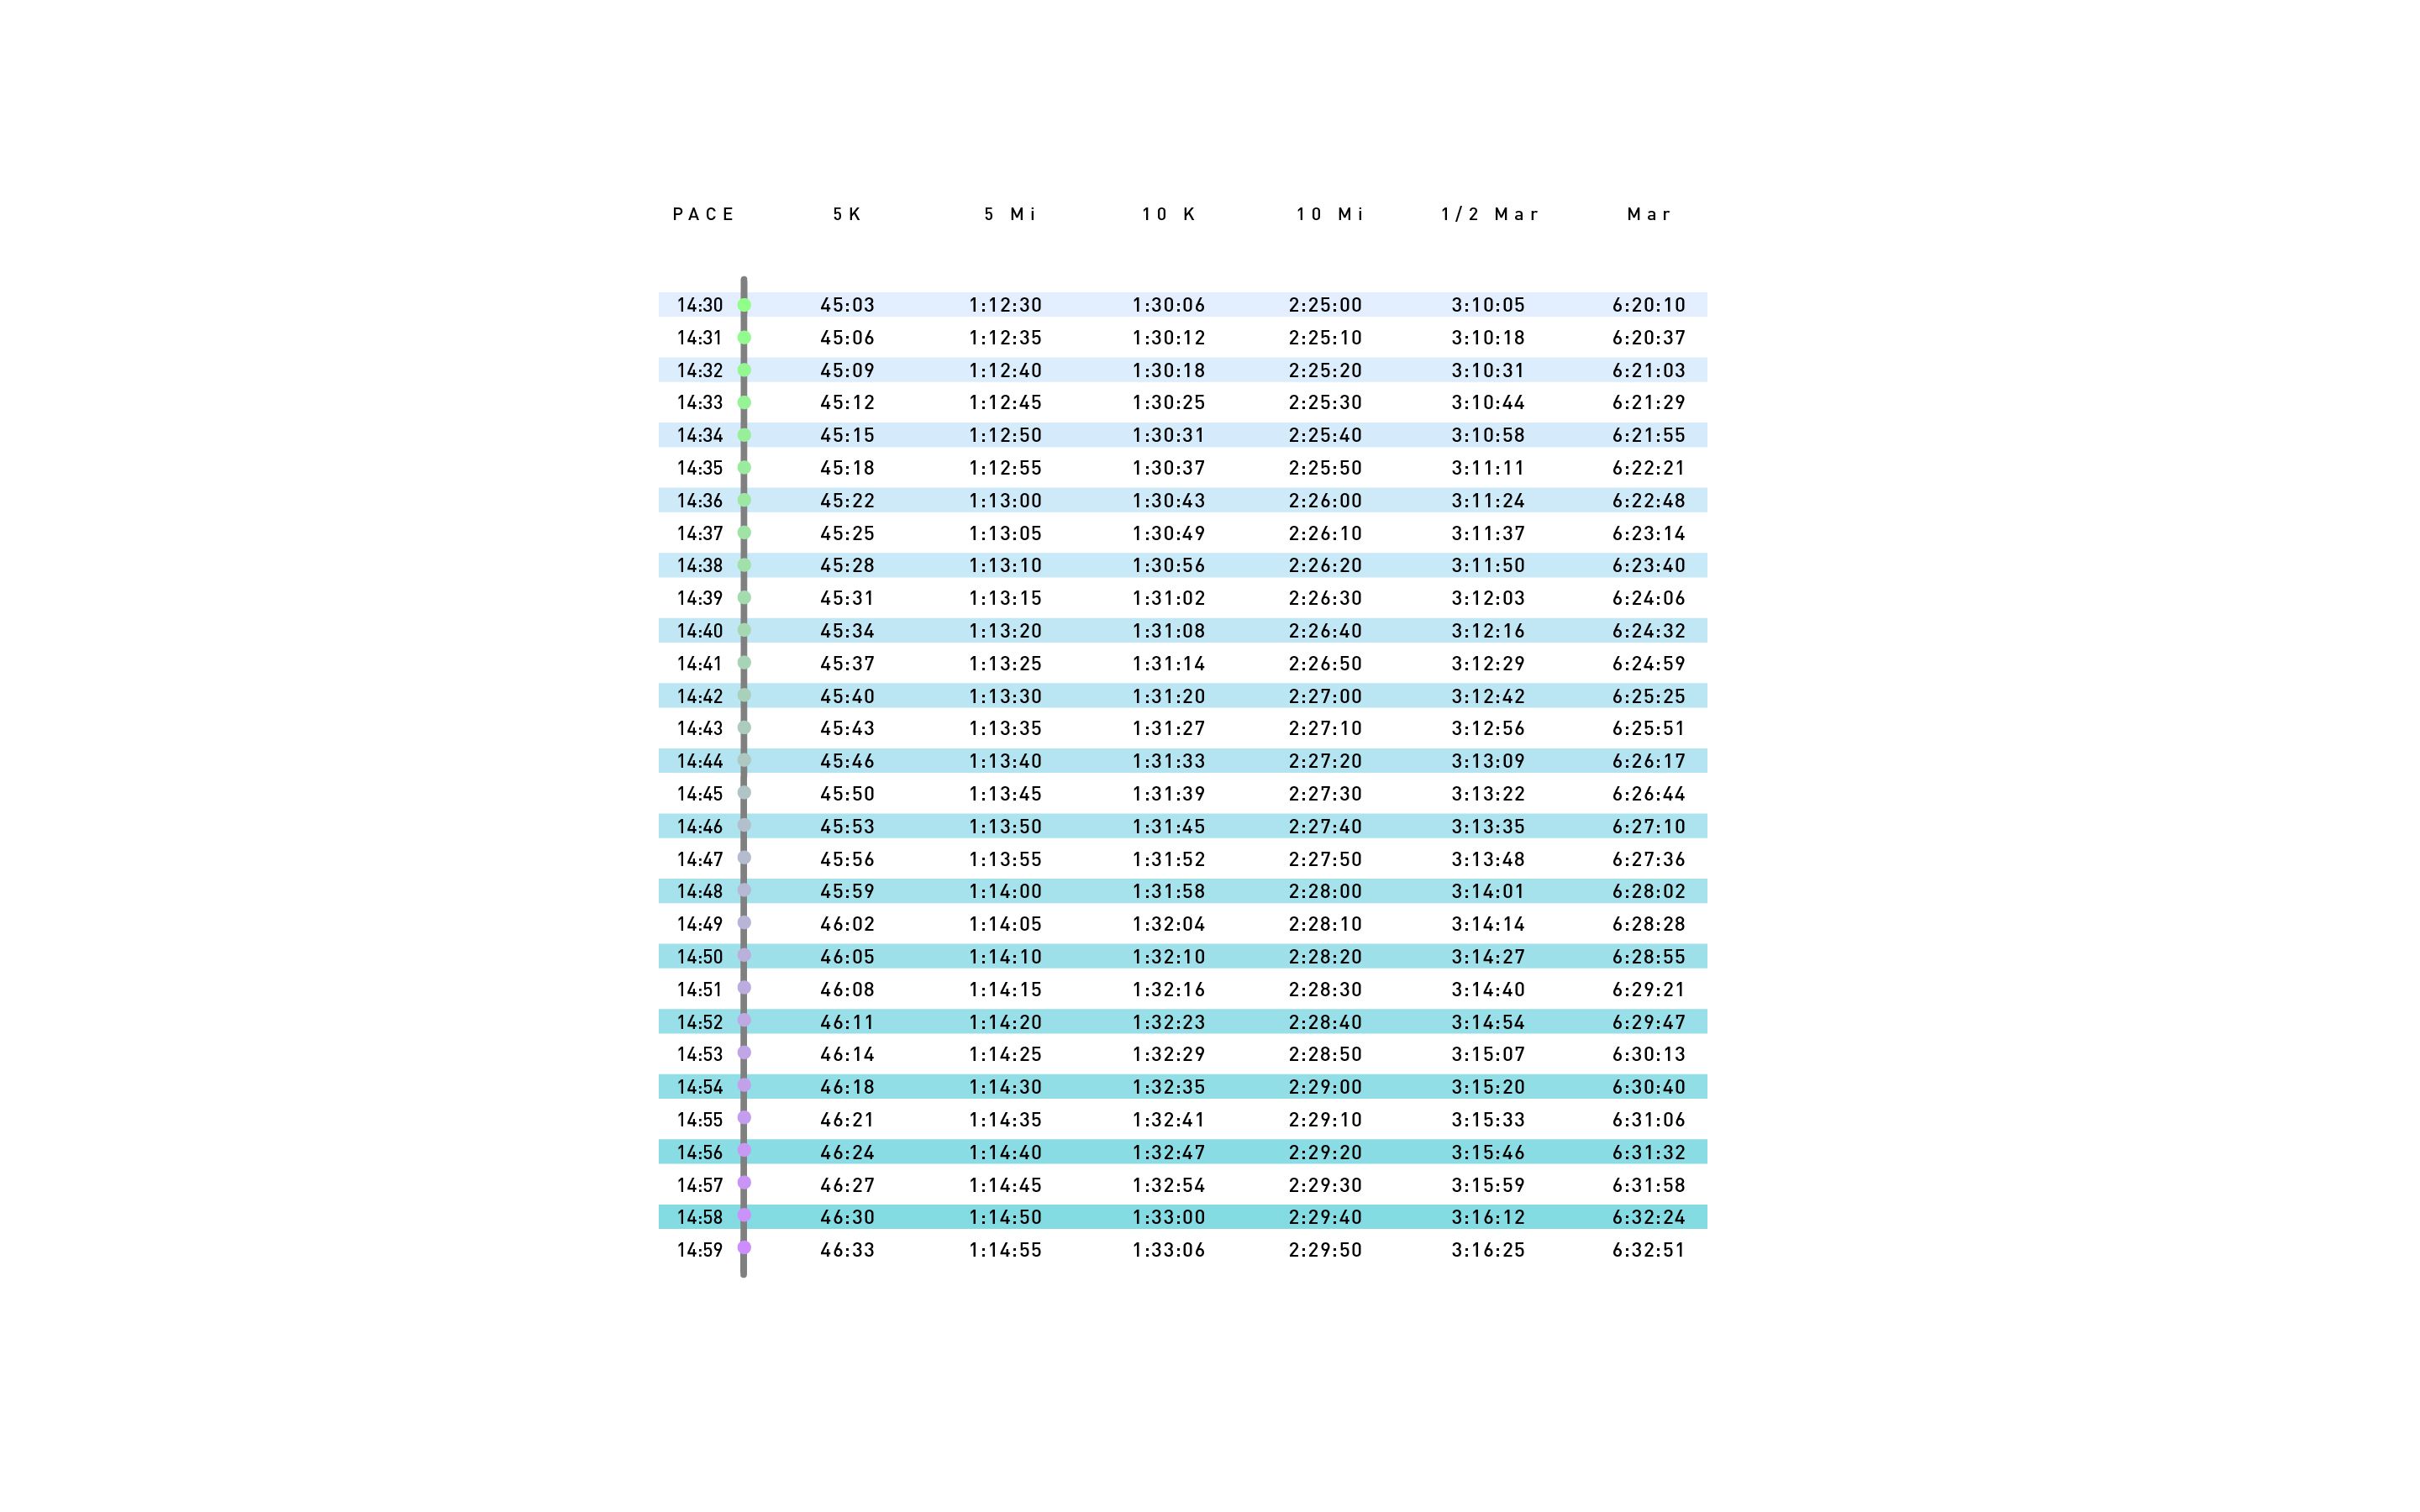 1 2 Marathon Pace Chart